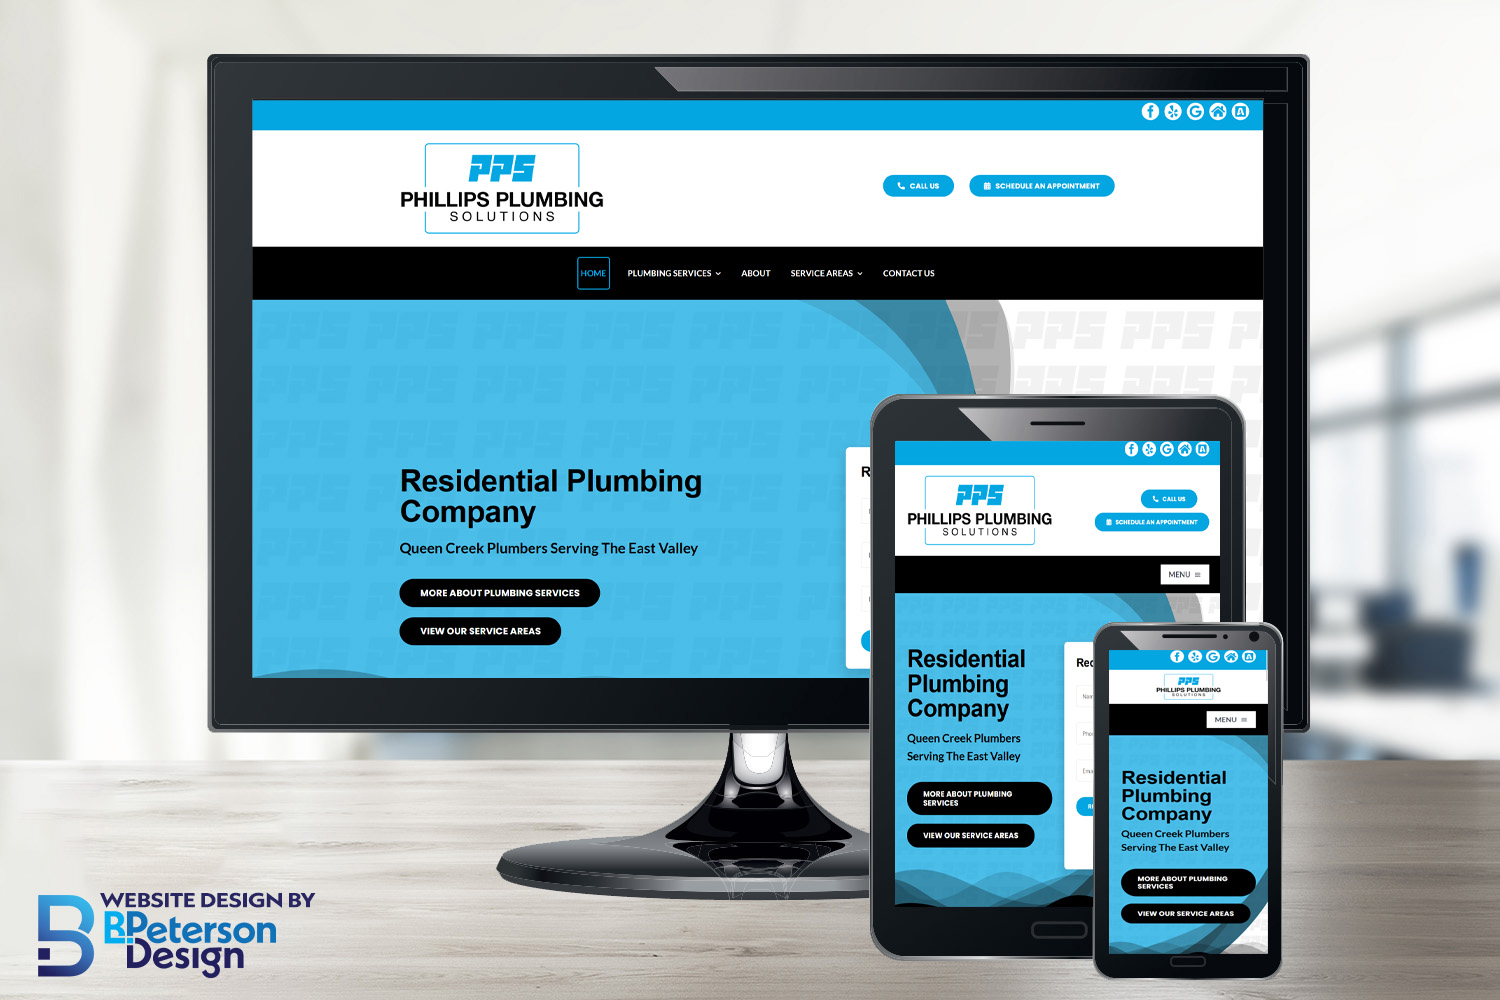 Screenshot of Phillips Plumbing Solutions of website responding on different platforms